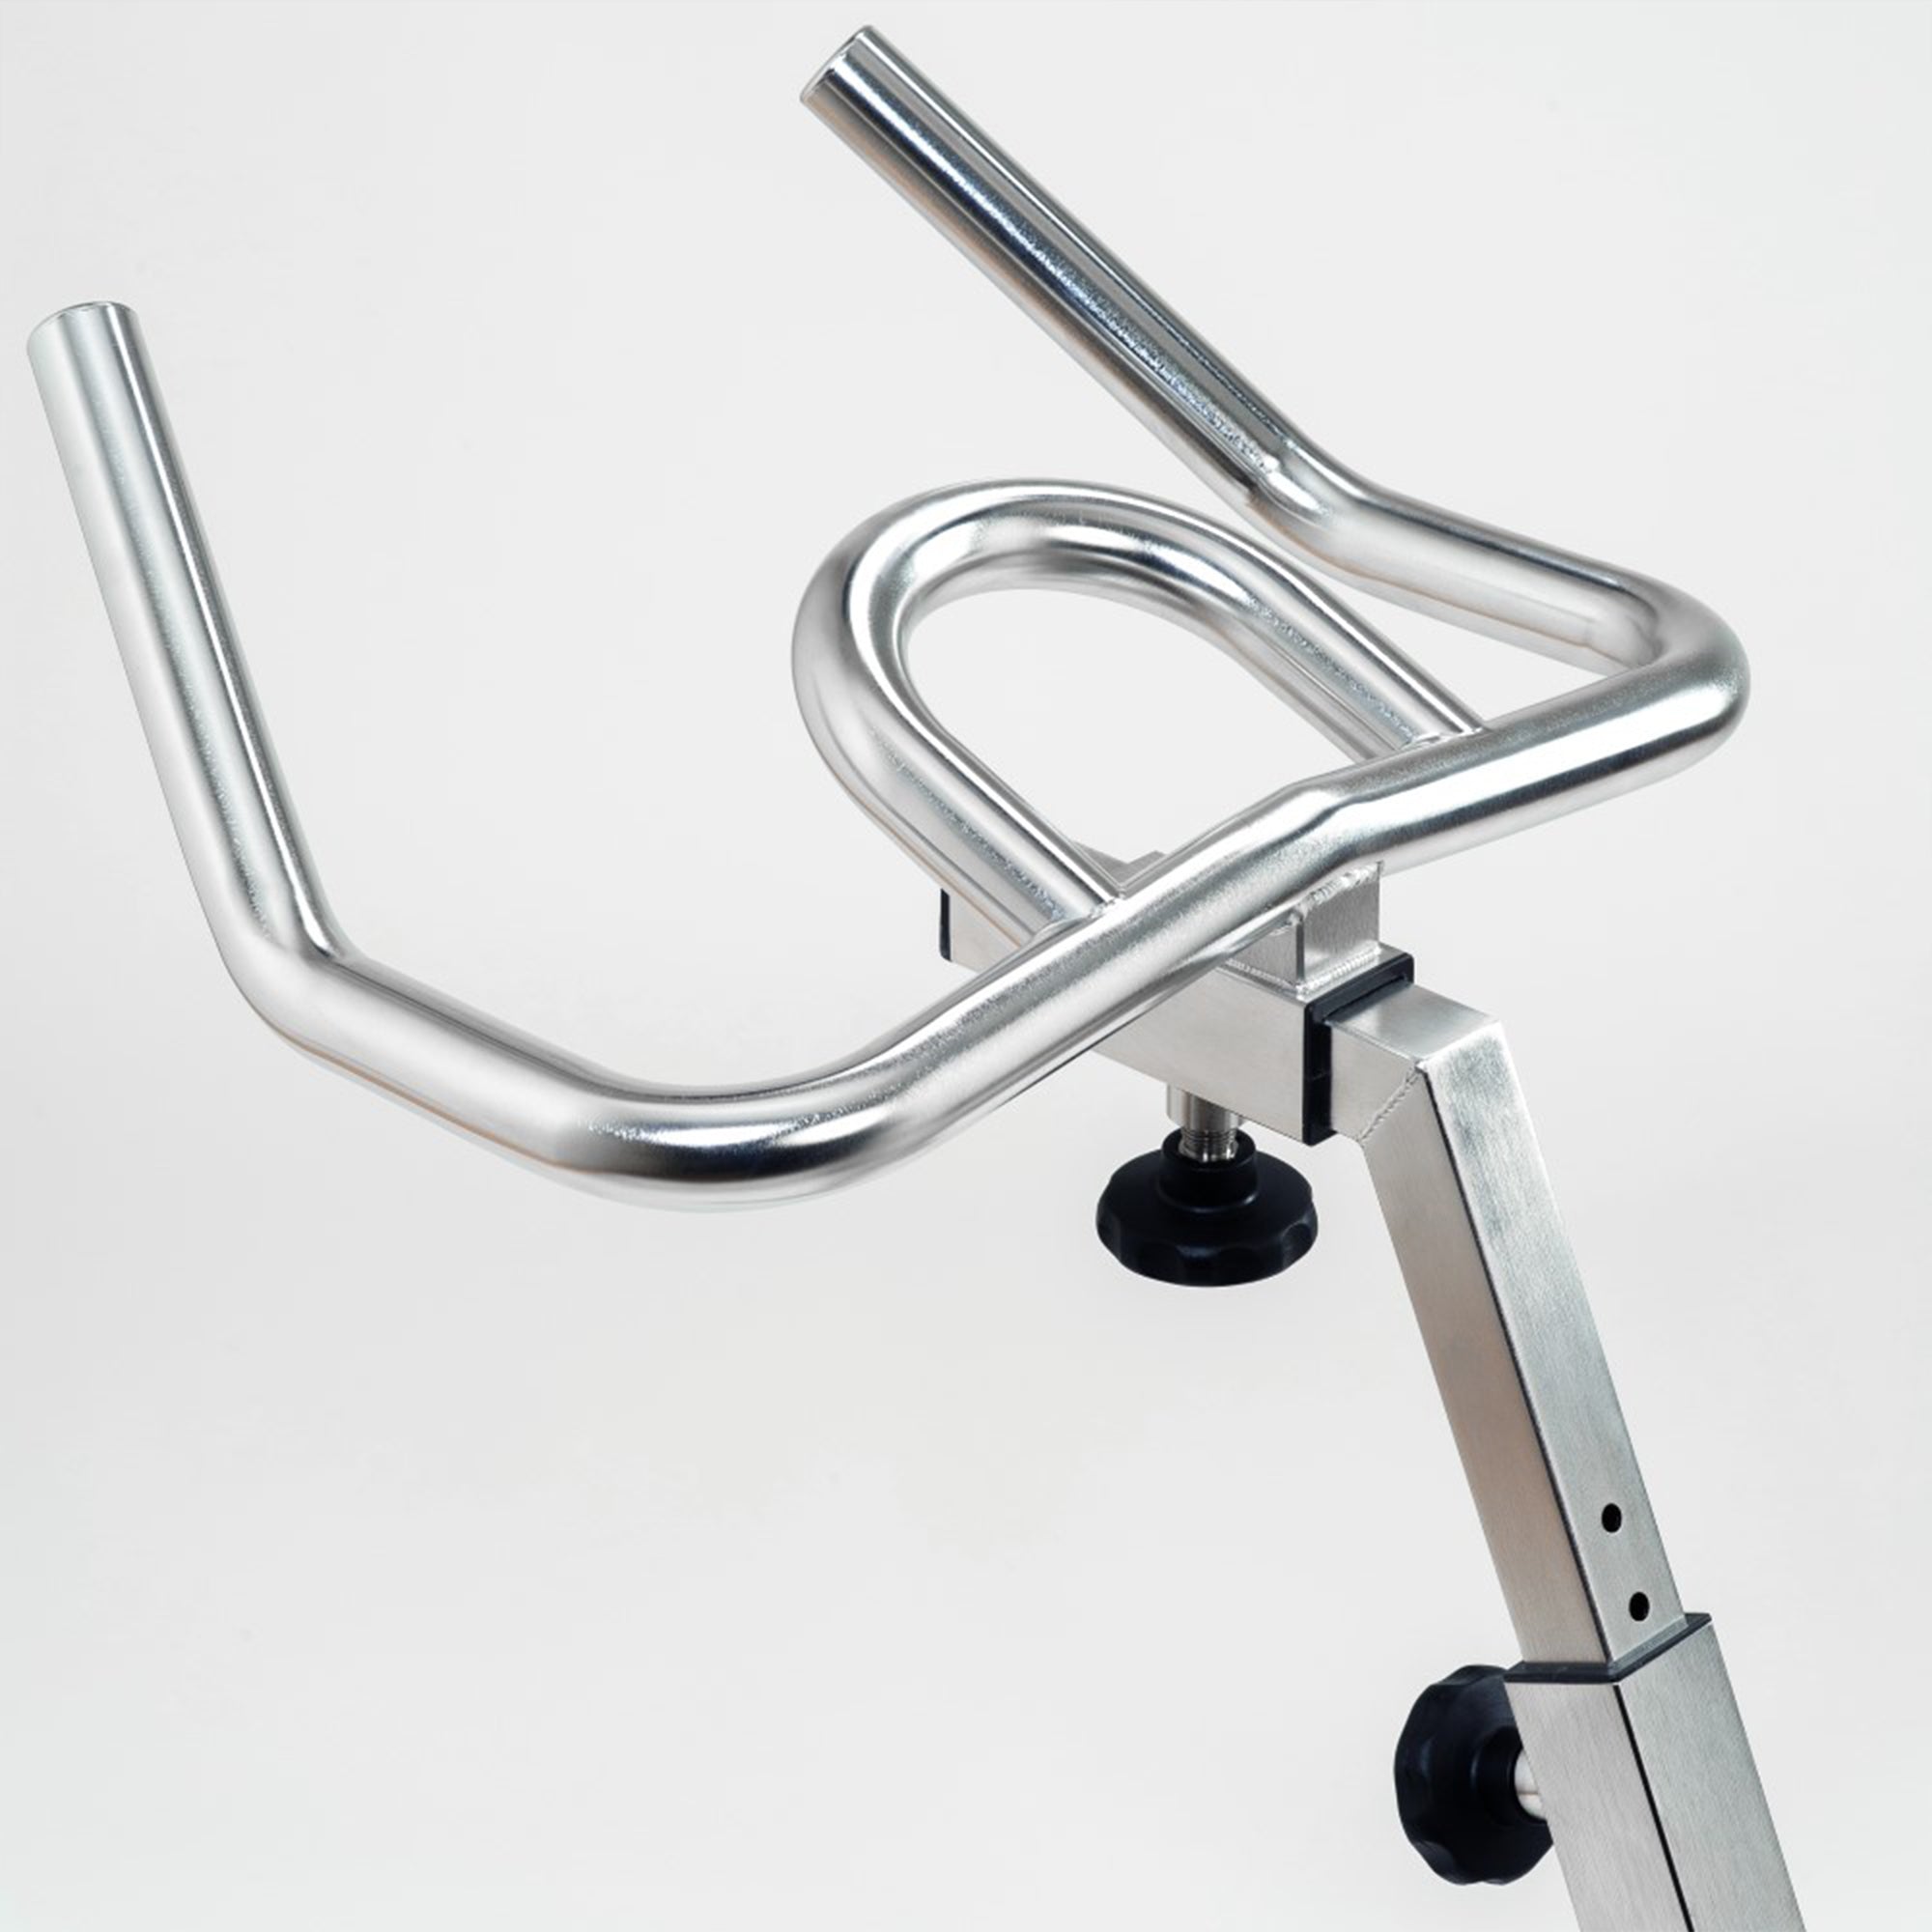 Comfort handlebars for the Aquarider® 6.0